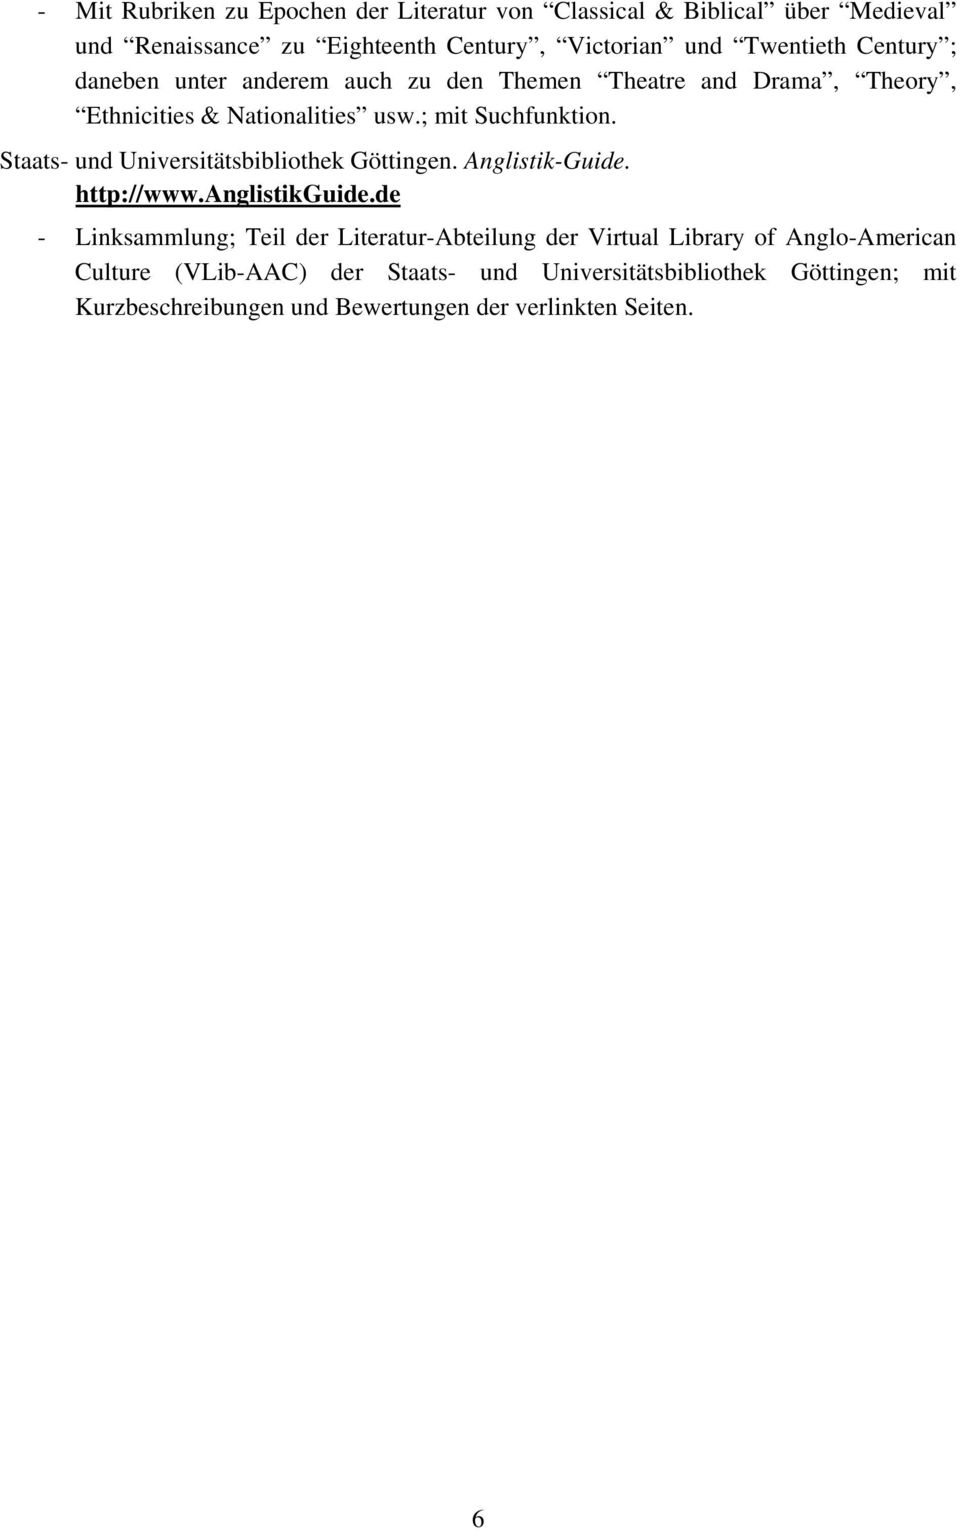 Staats- und Universitätsbibliothek Göttingen. Anglistik-Guide. http://www.anglistikguide.